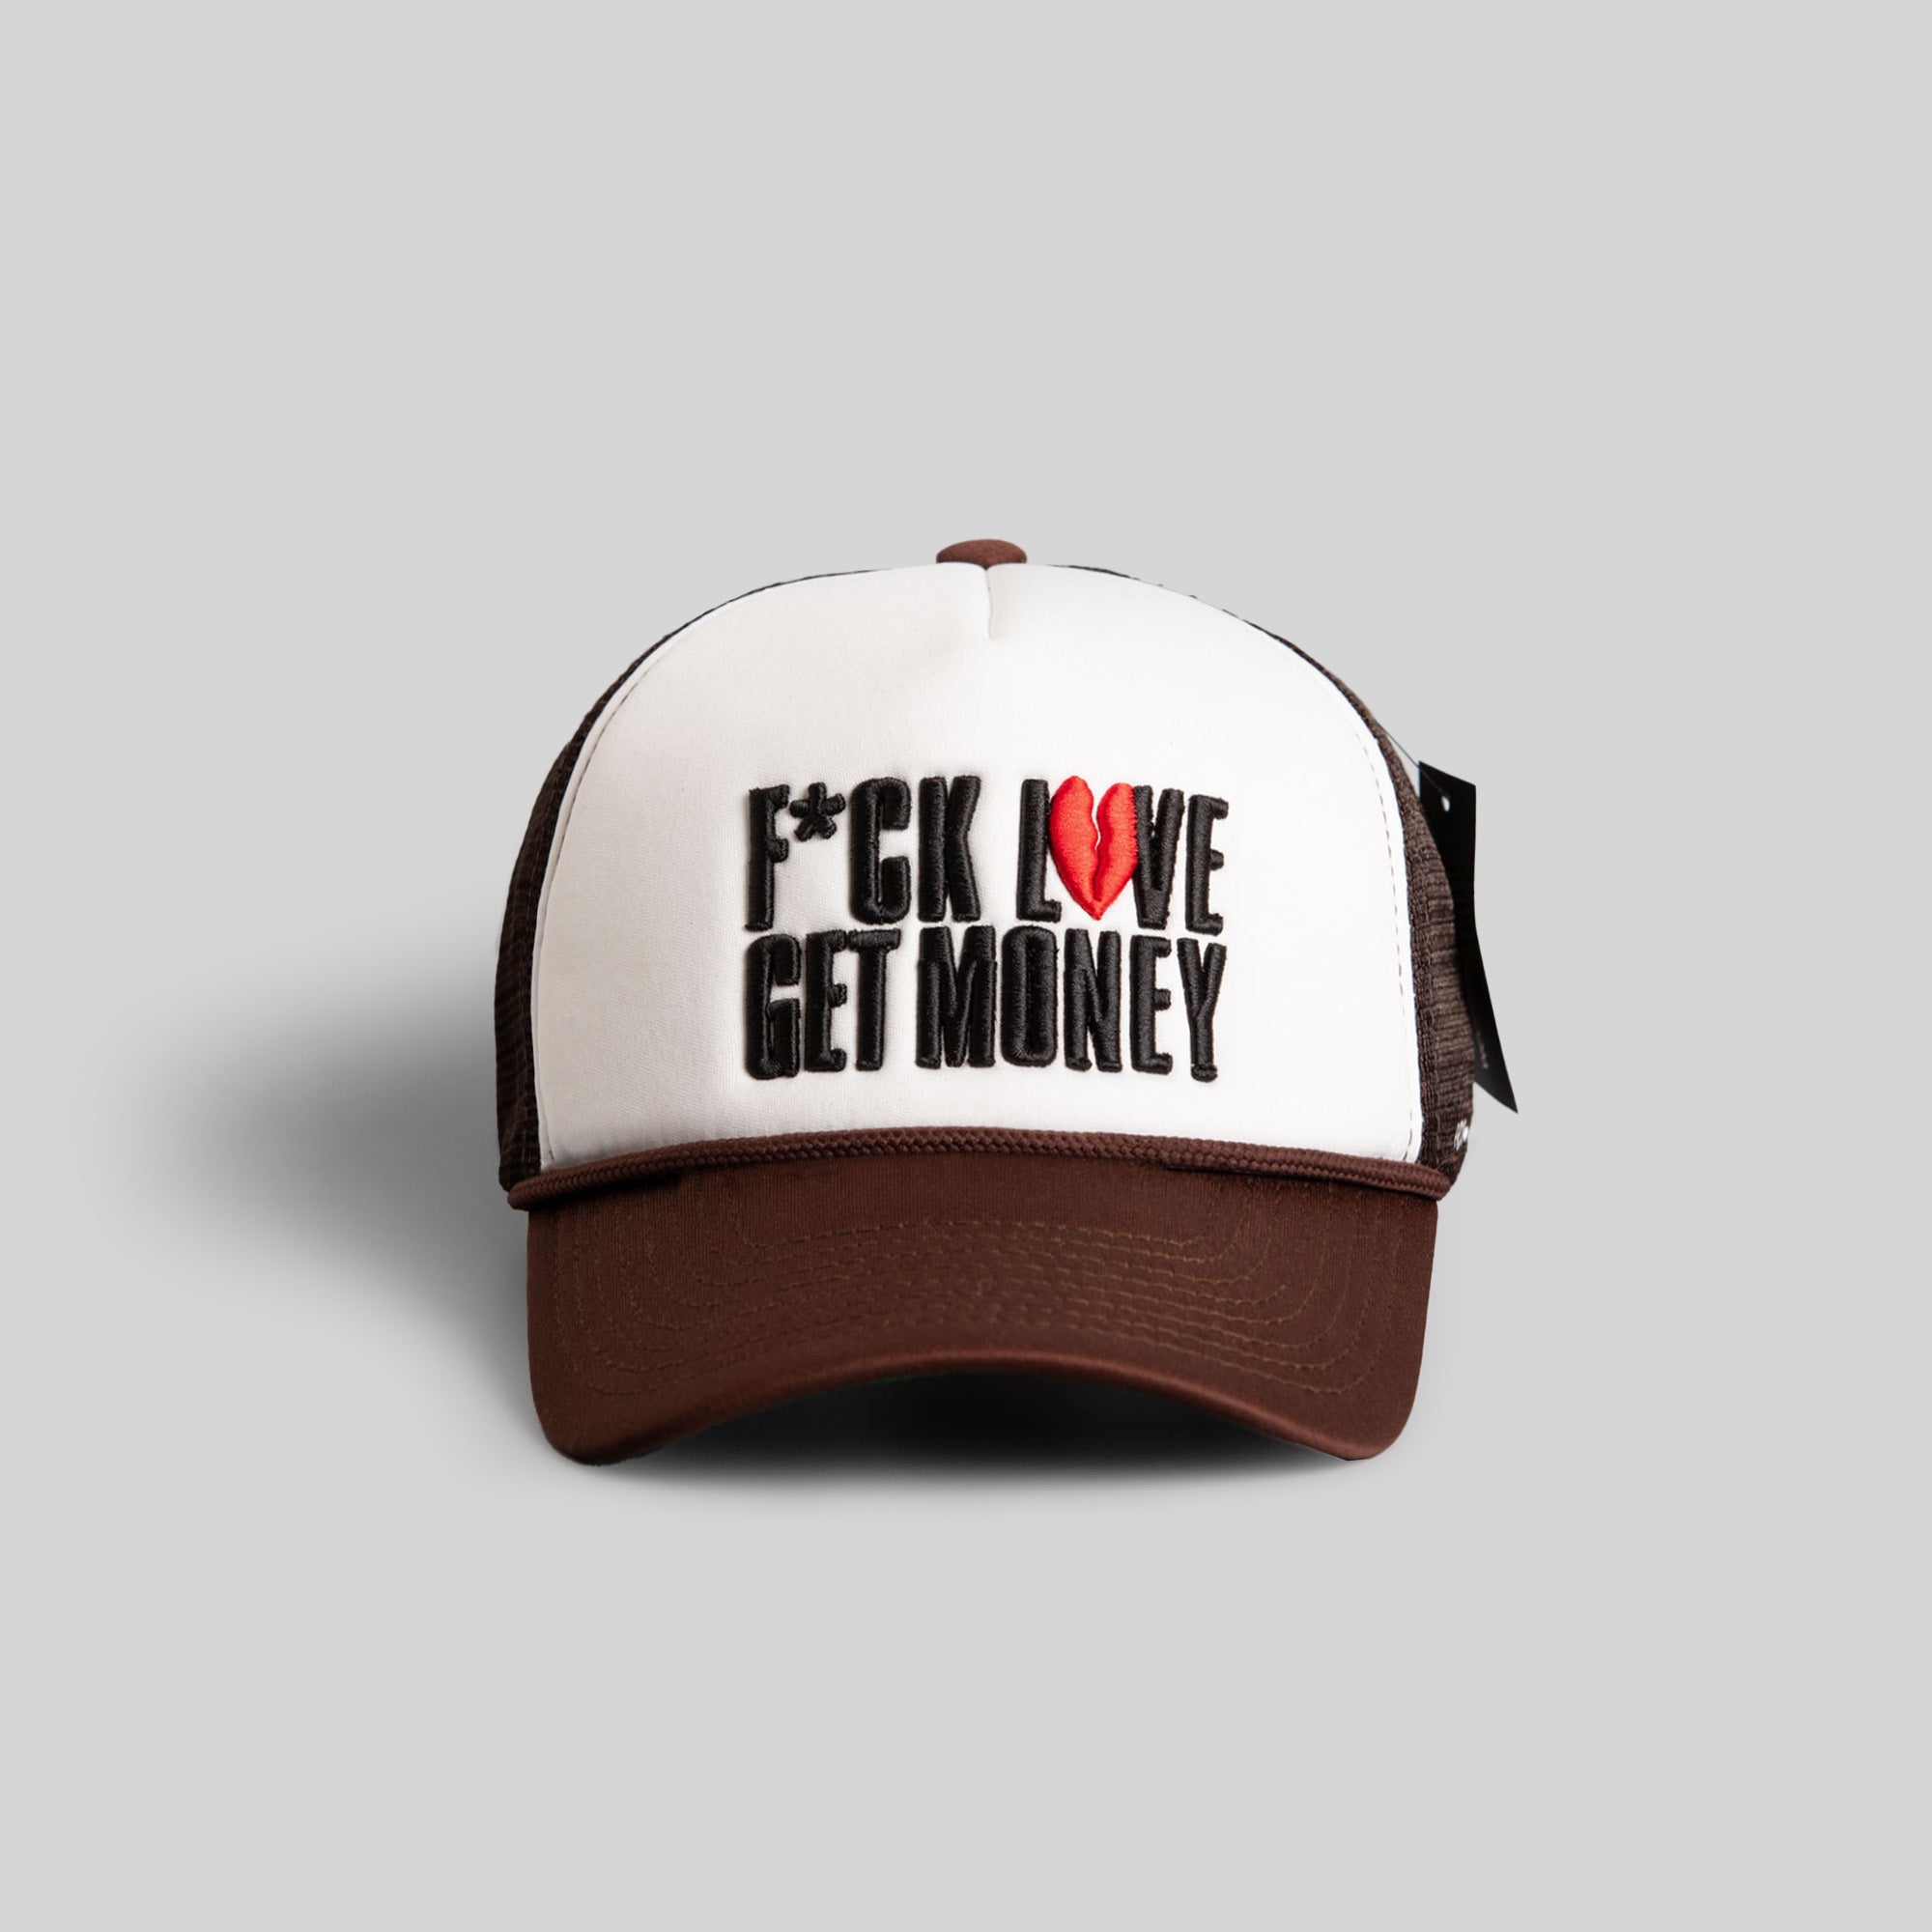 F*CK LOVE, GET MONEY WHITE/MOCHA TRUCKER HAT